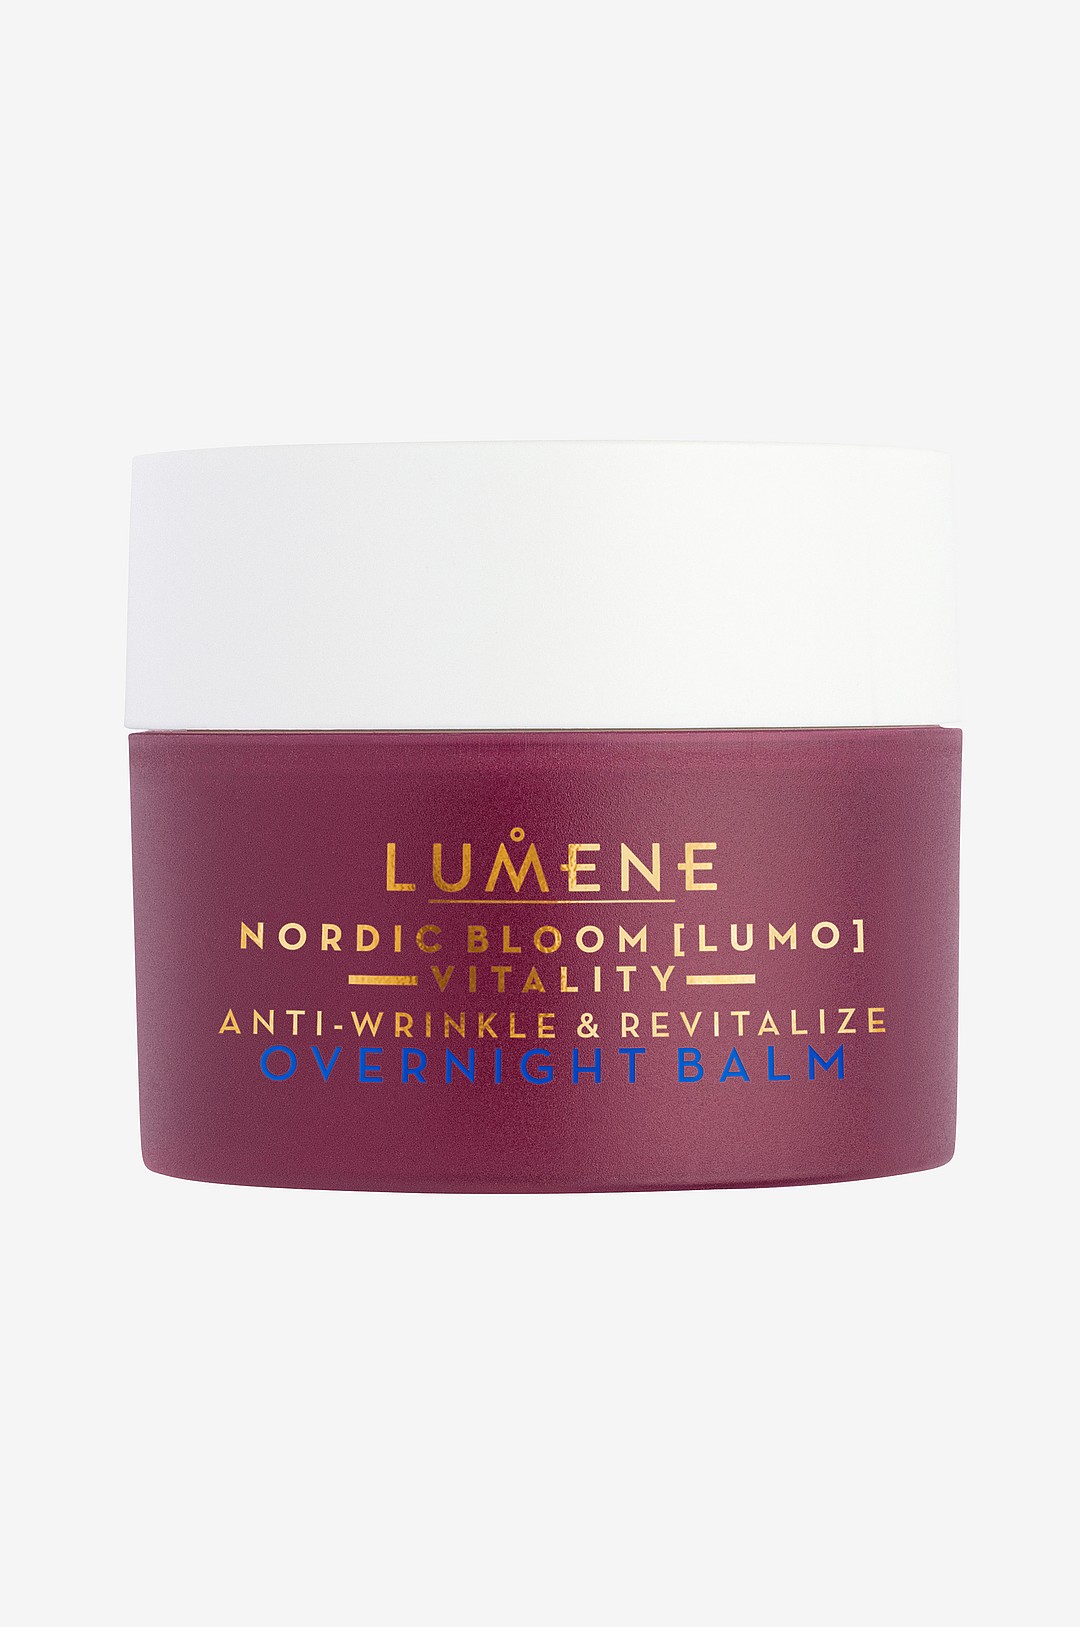 Lumene - Nordic Bloom Vitality Anti-Wrinkle & Revitalize Overnight Balm